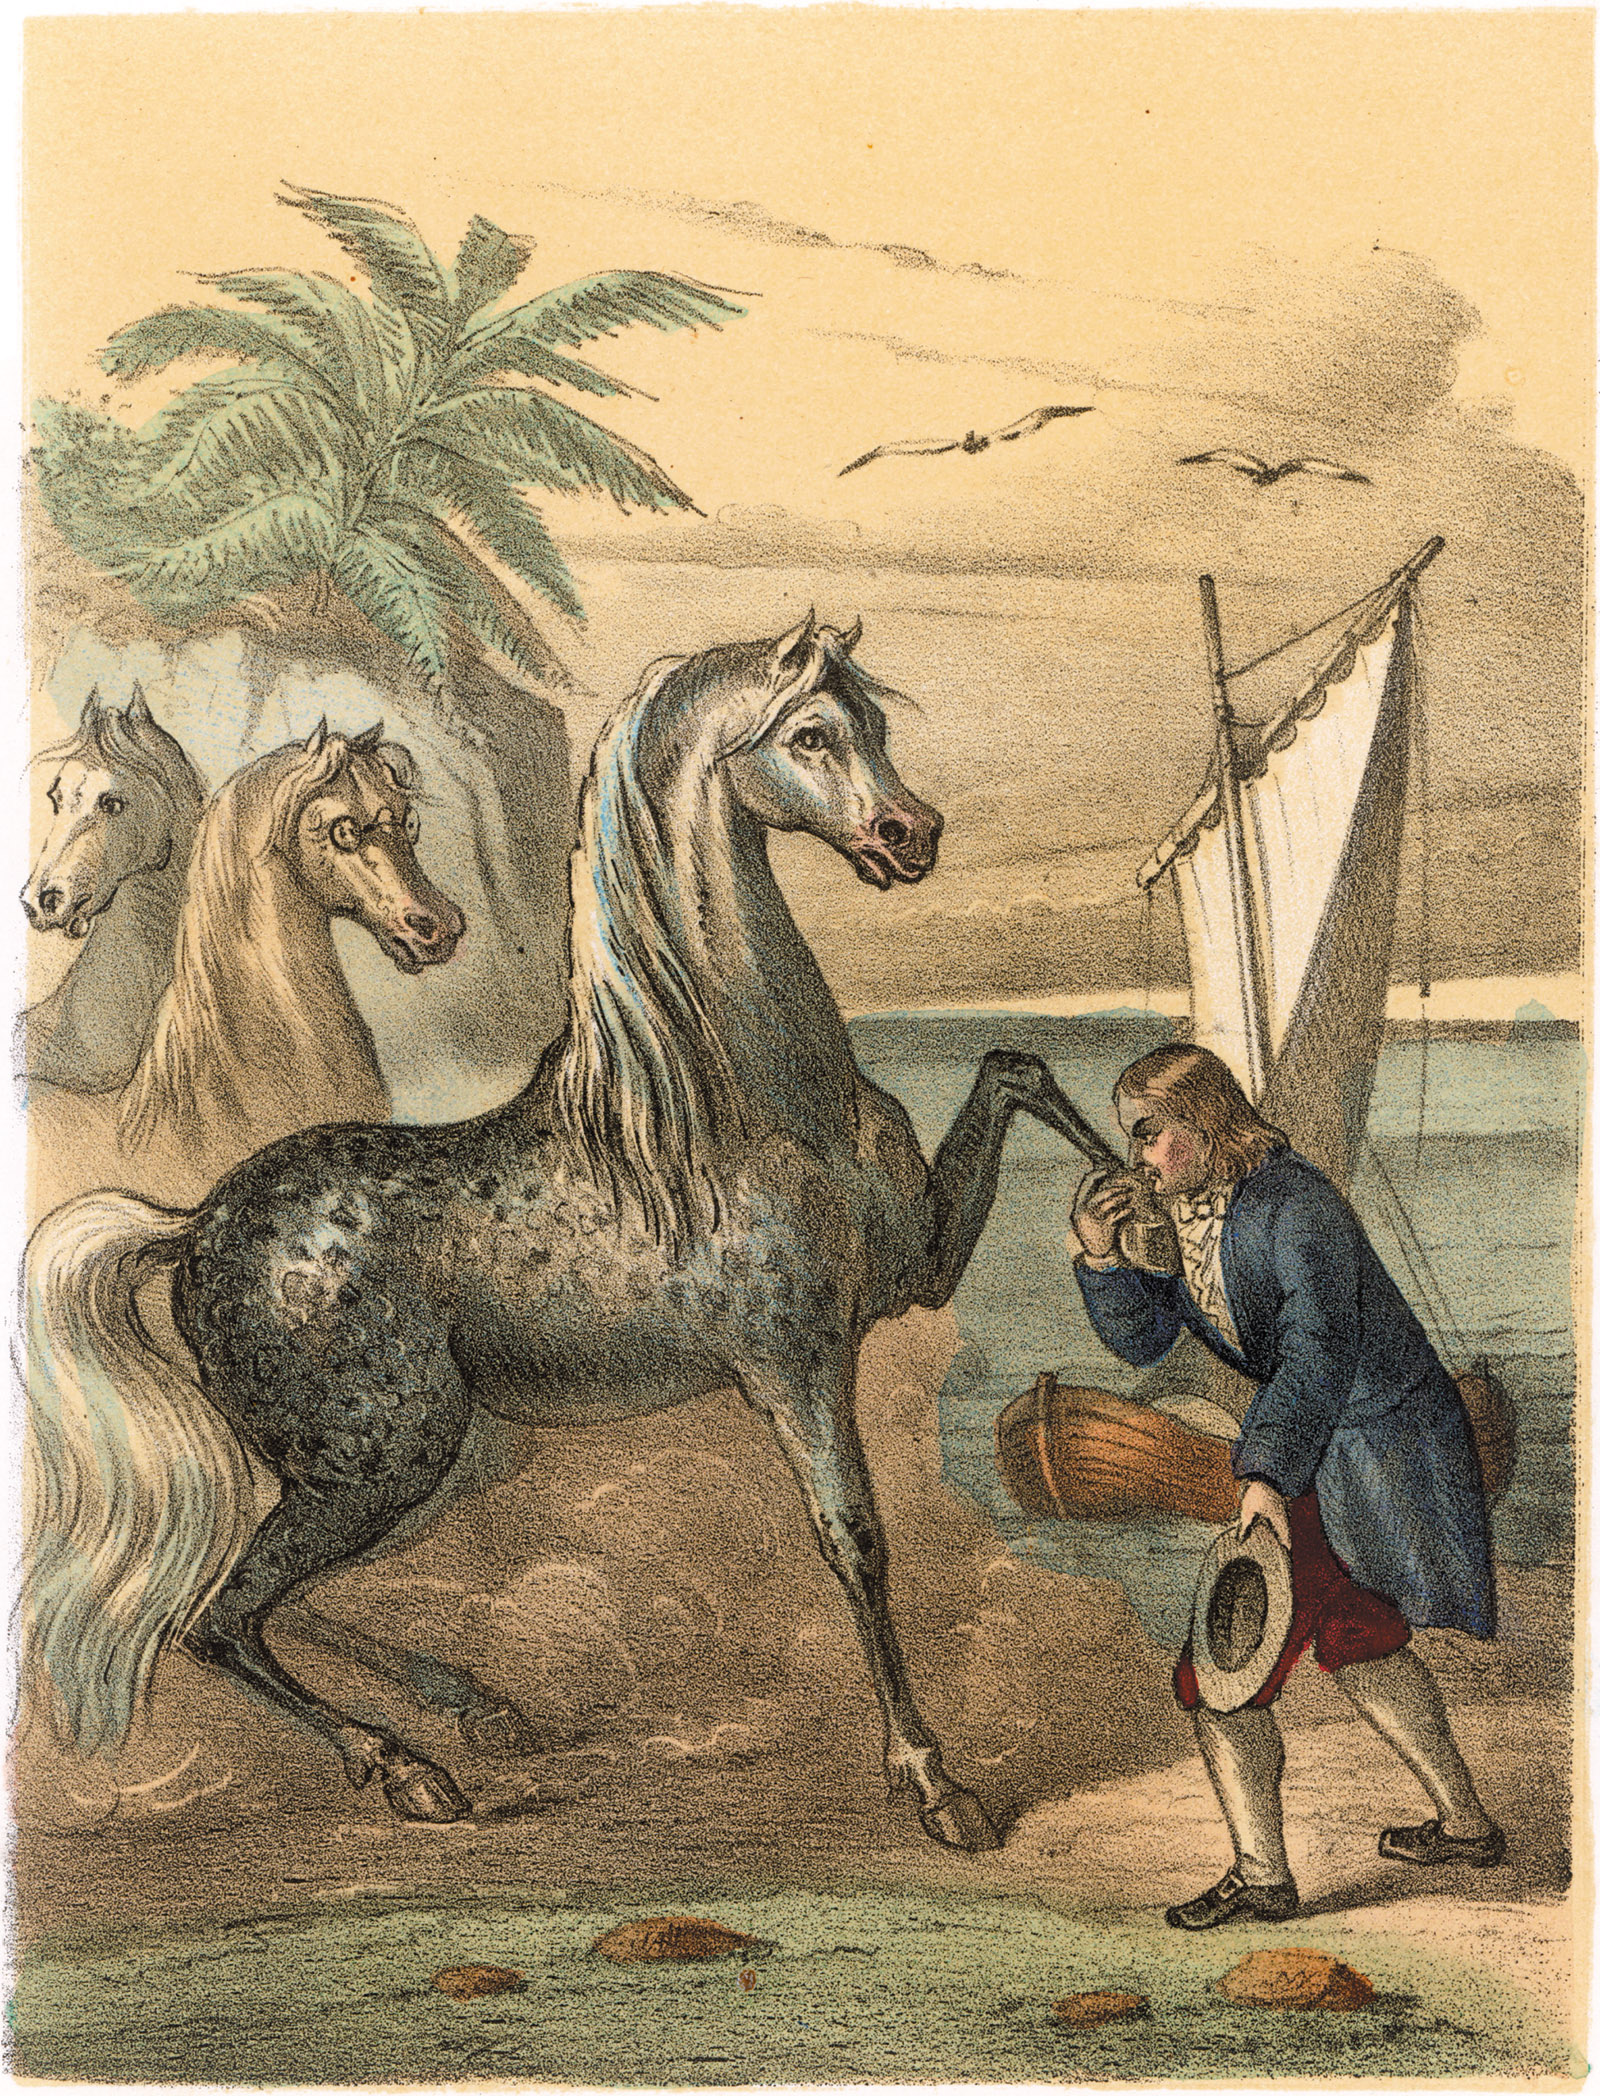 Gulliver leaving Houyhnhnms, illustration from Jonathan Swift’s Gulliver’s Travels